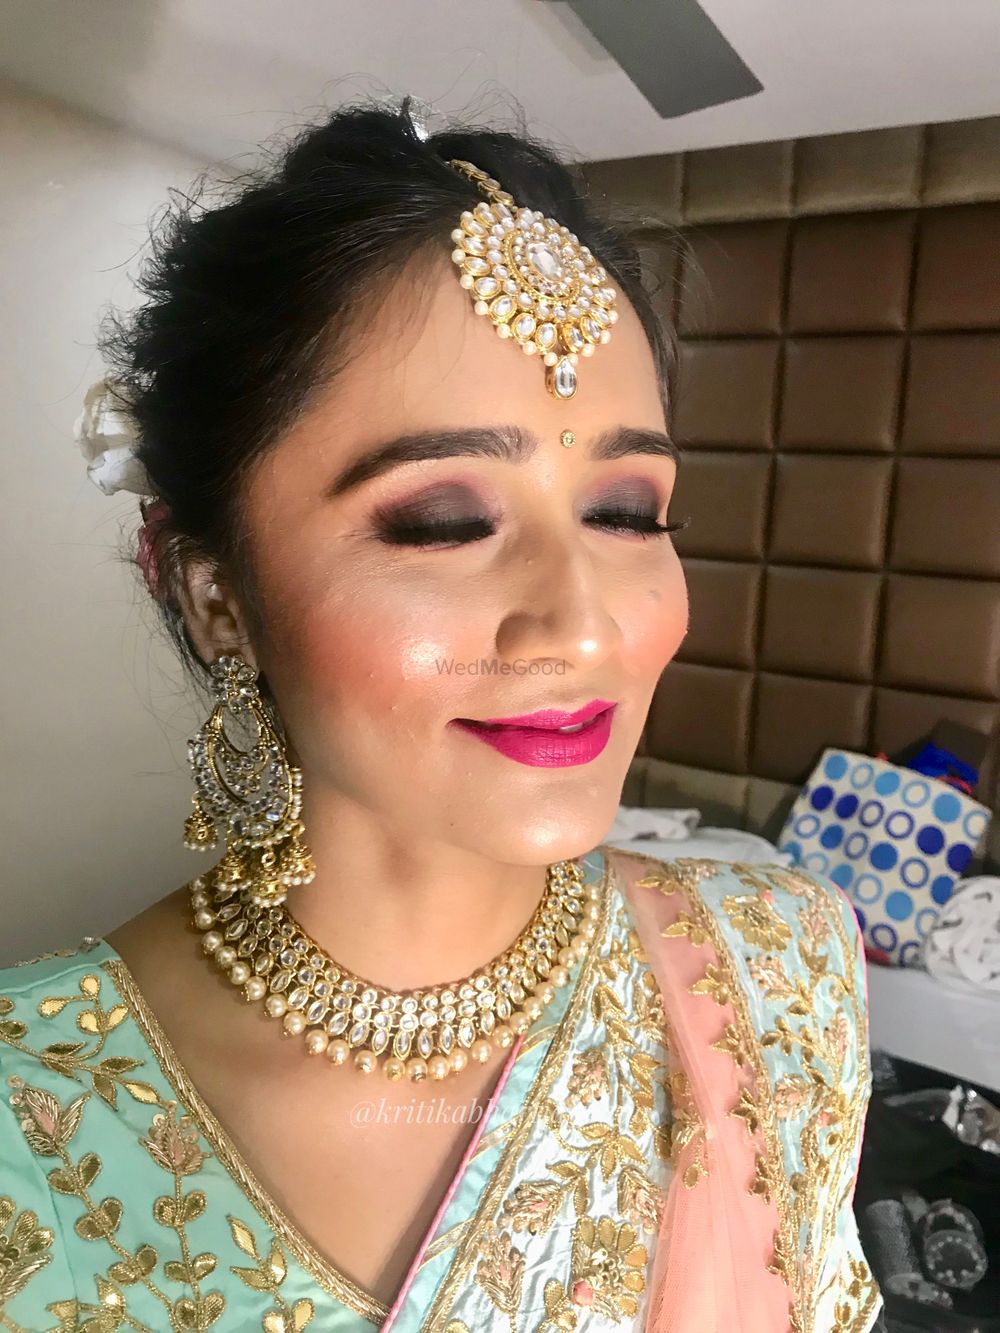 Photo From HD Bridal Makeup - By Kritika Bhartia Mua